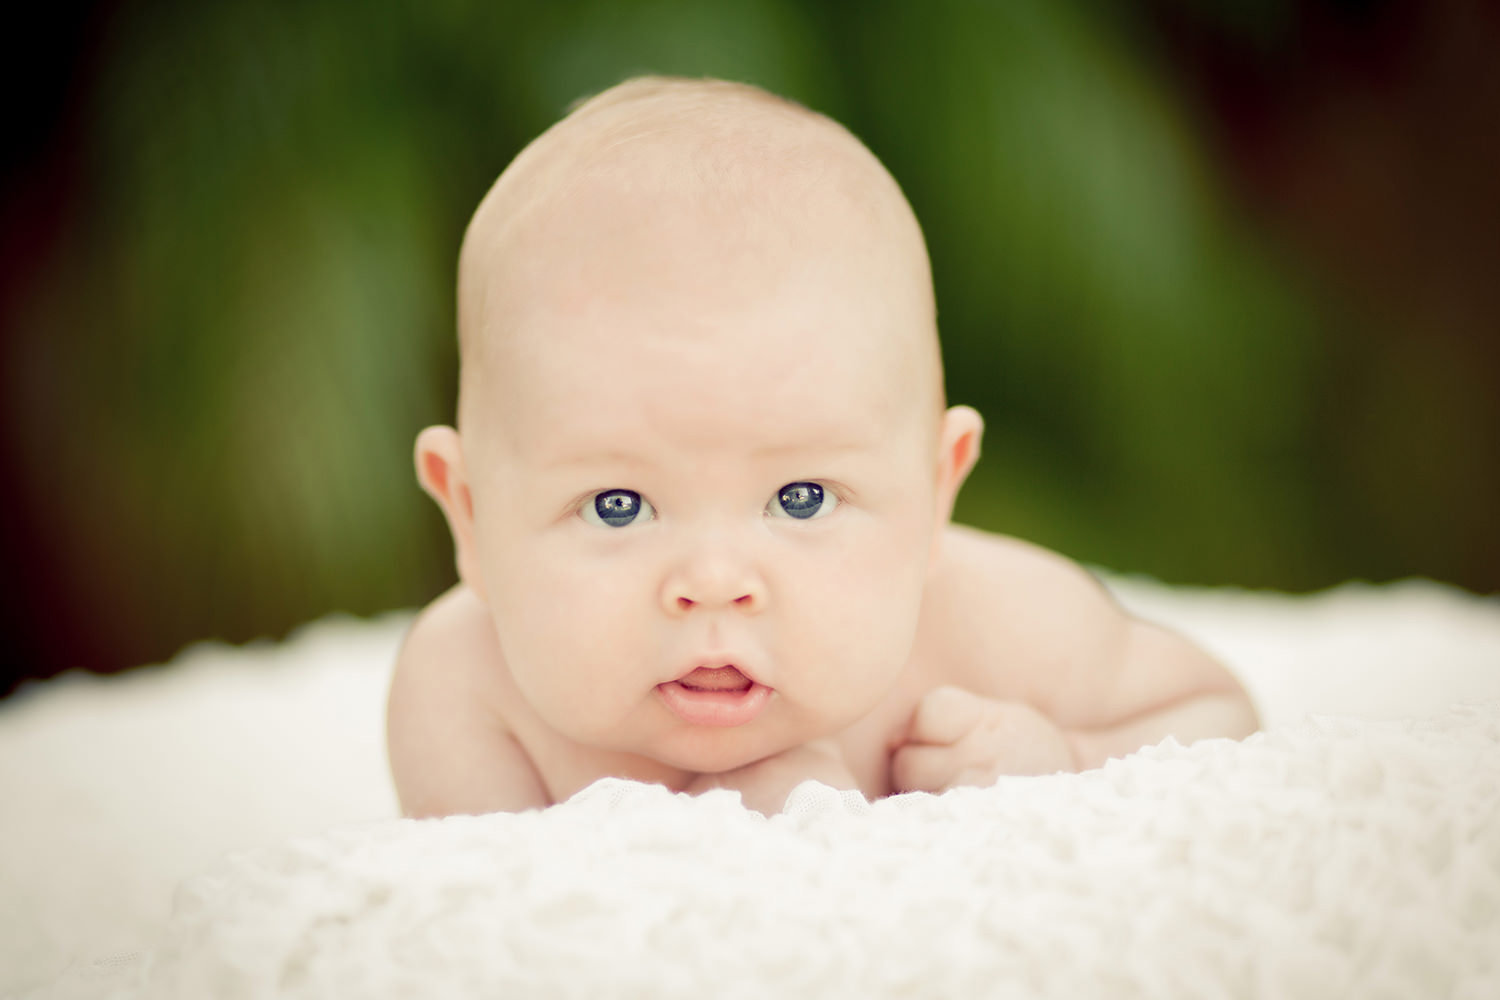 san diego newborn photographer | newborn with big blue eyes wide awake really cute face